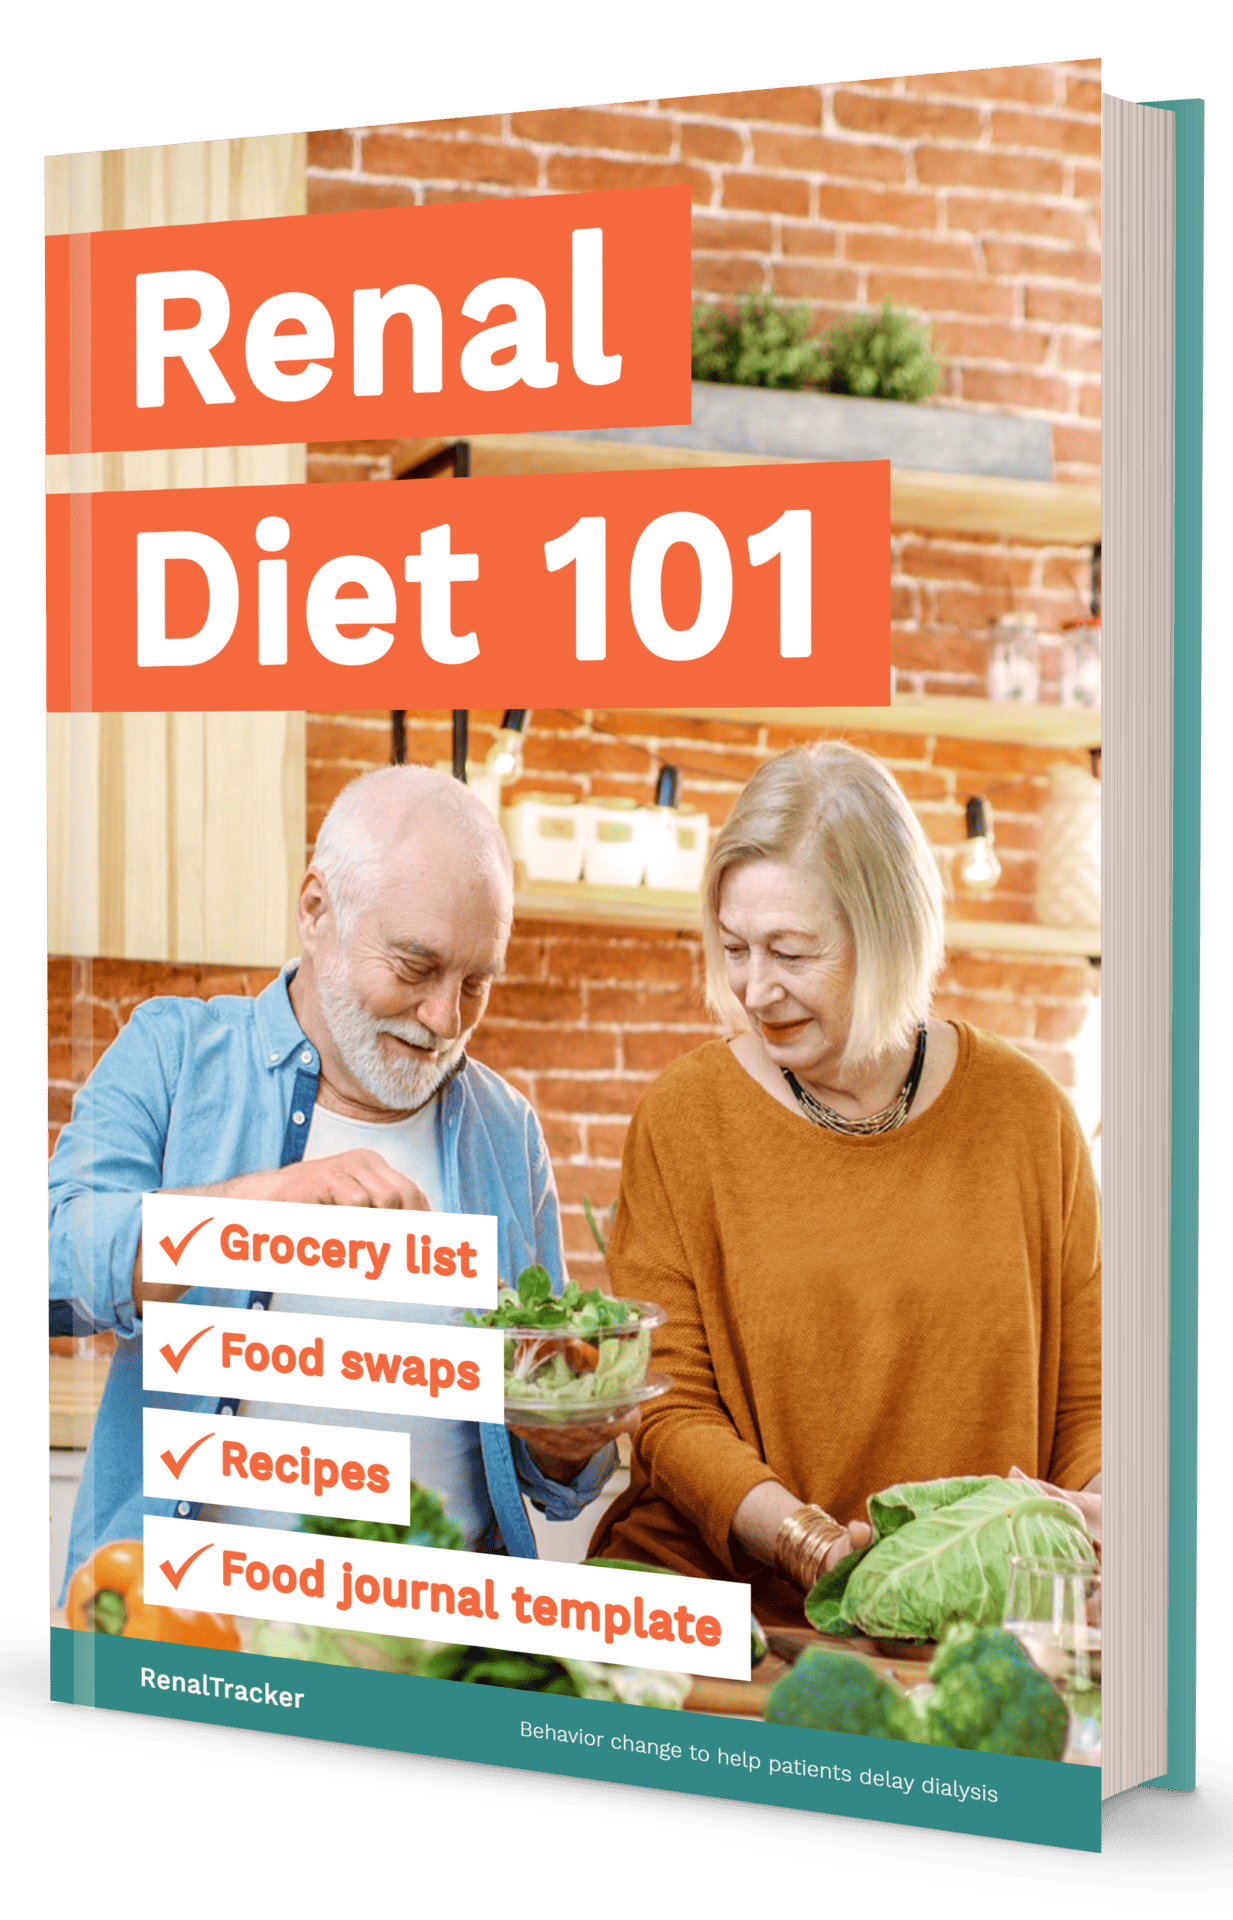 Renal Diet 101 eBook cover